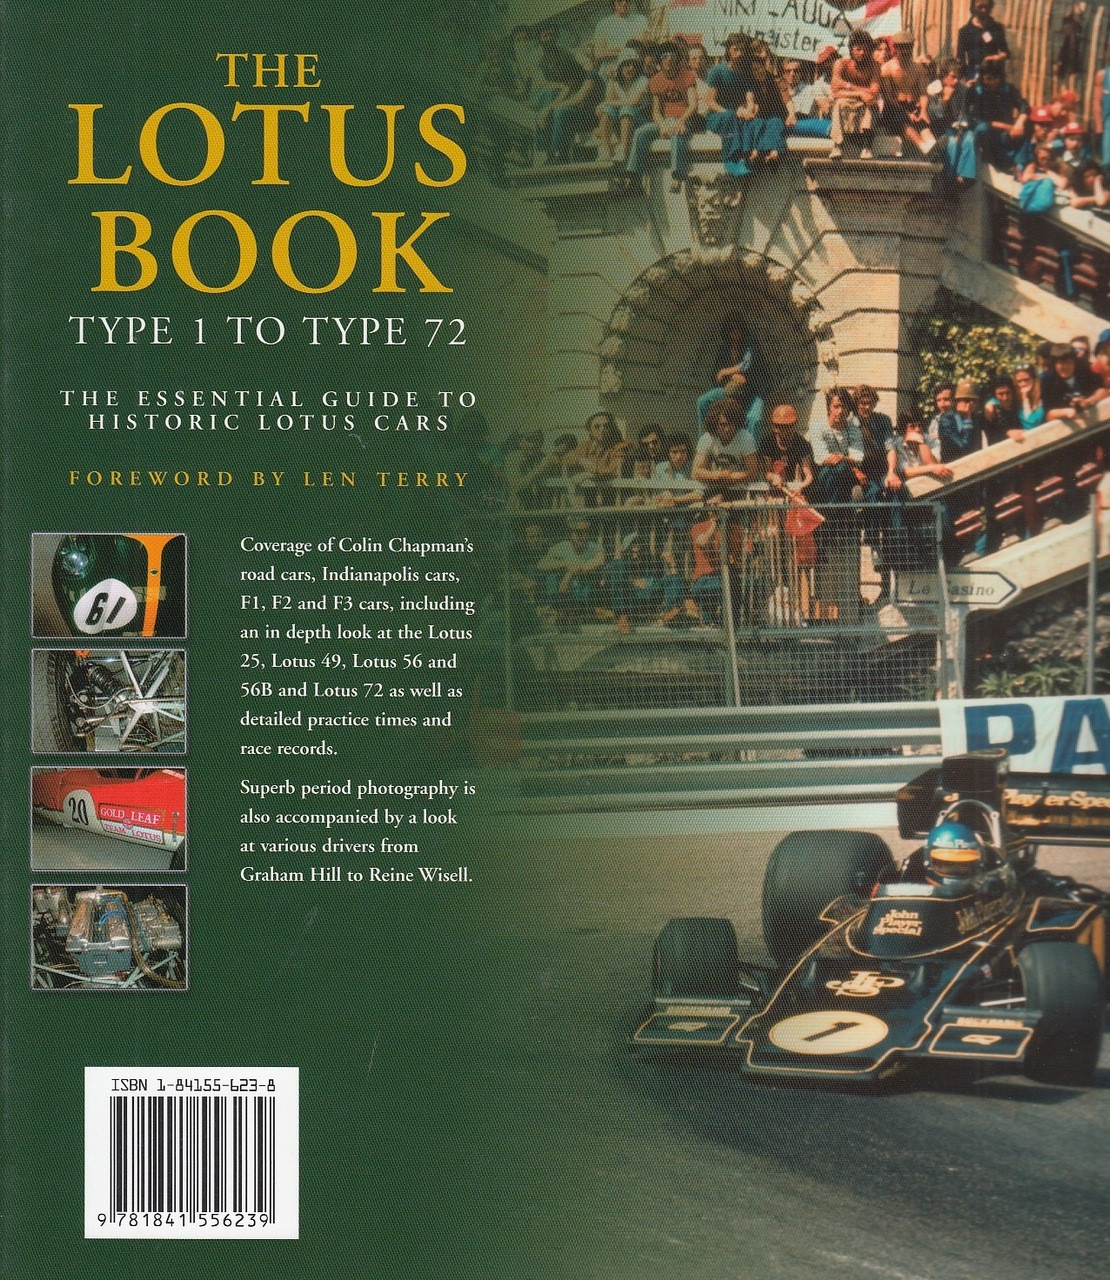 The Lotus Book